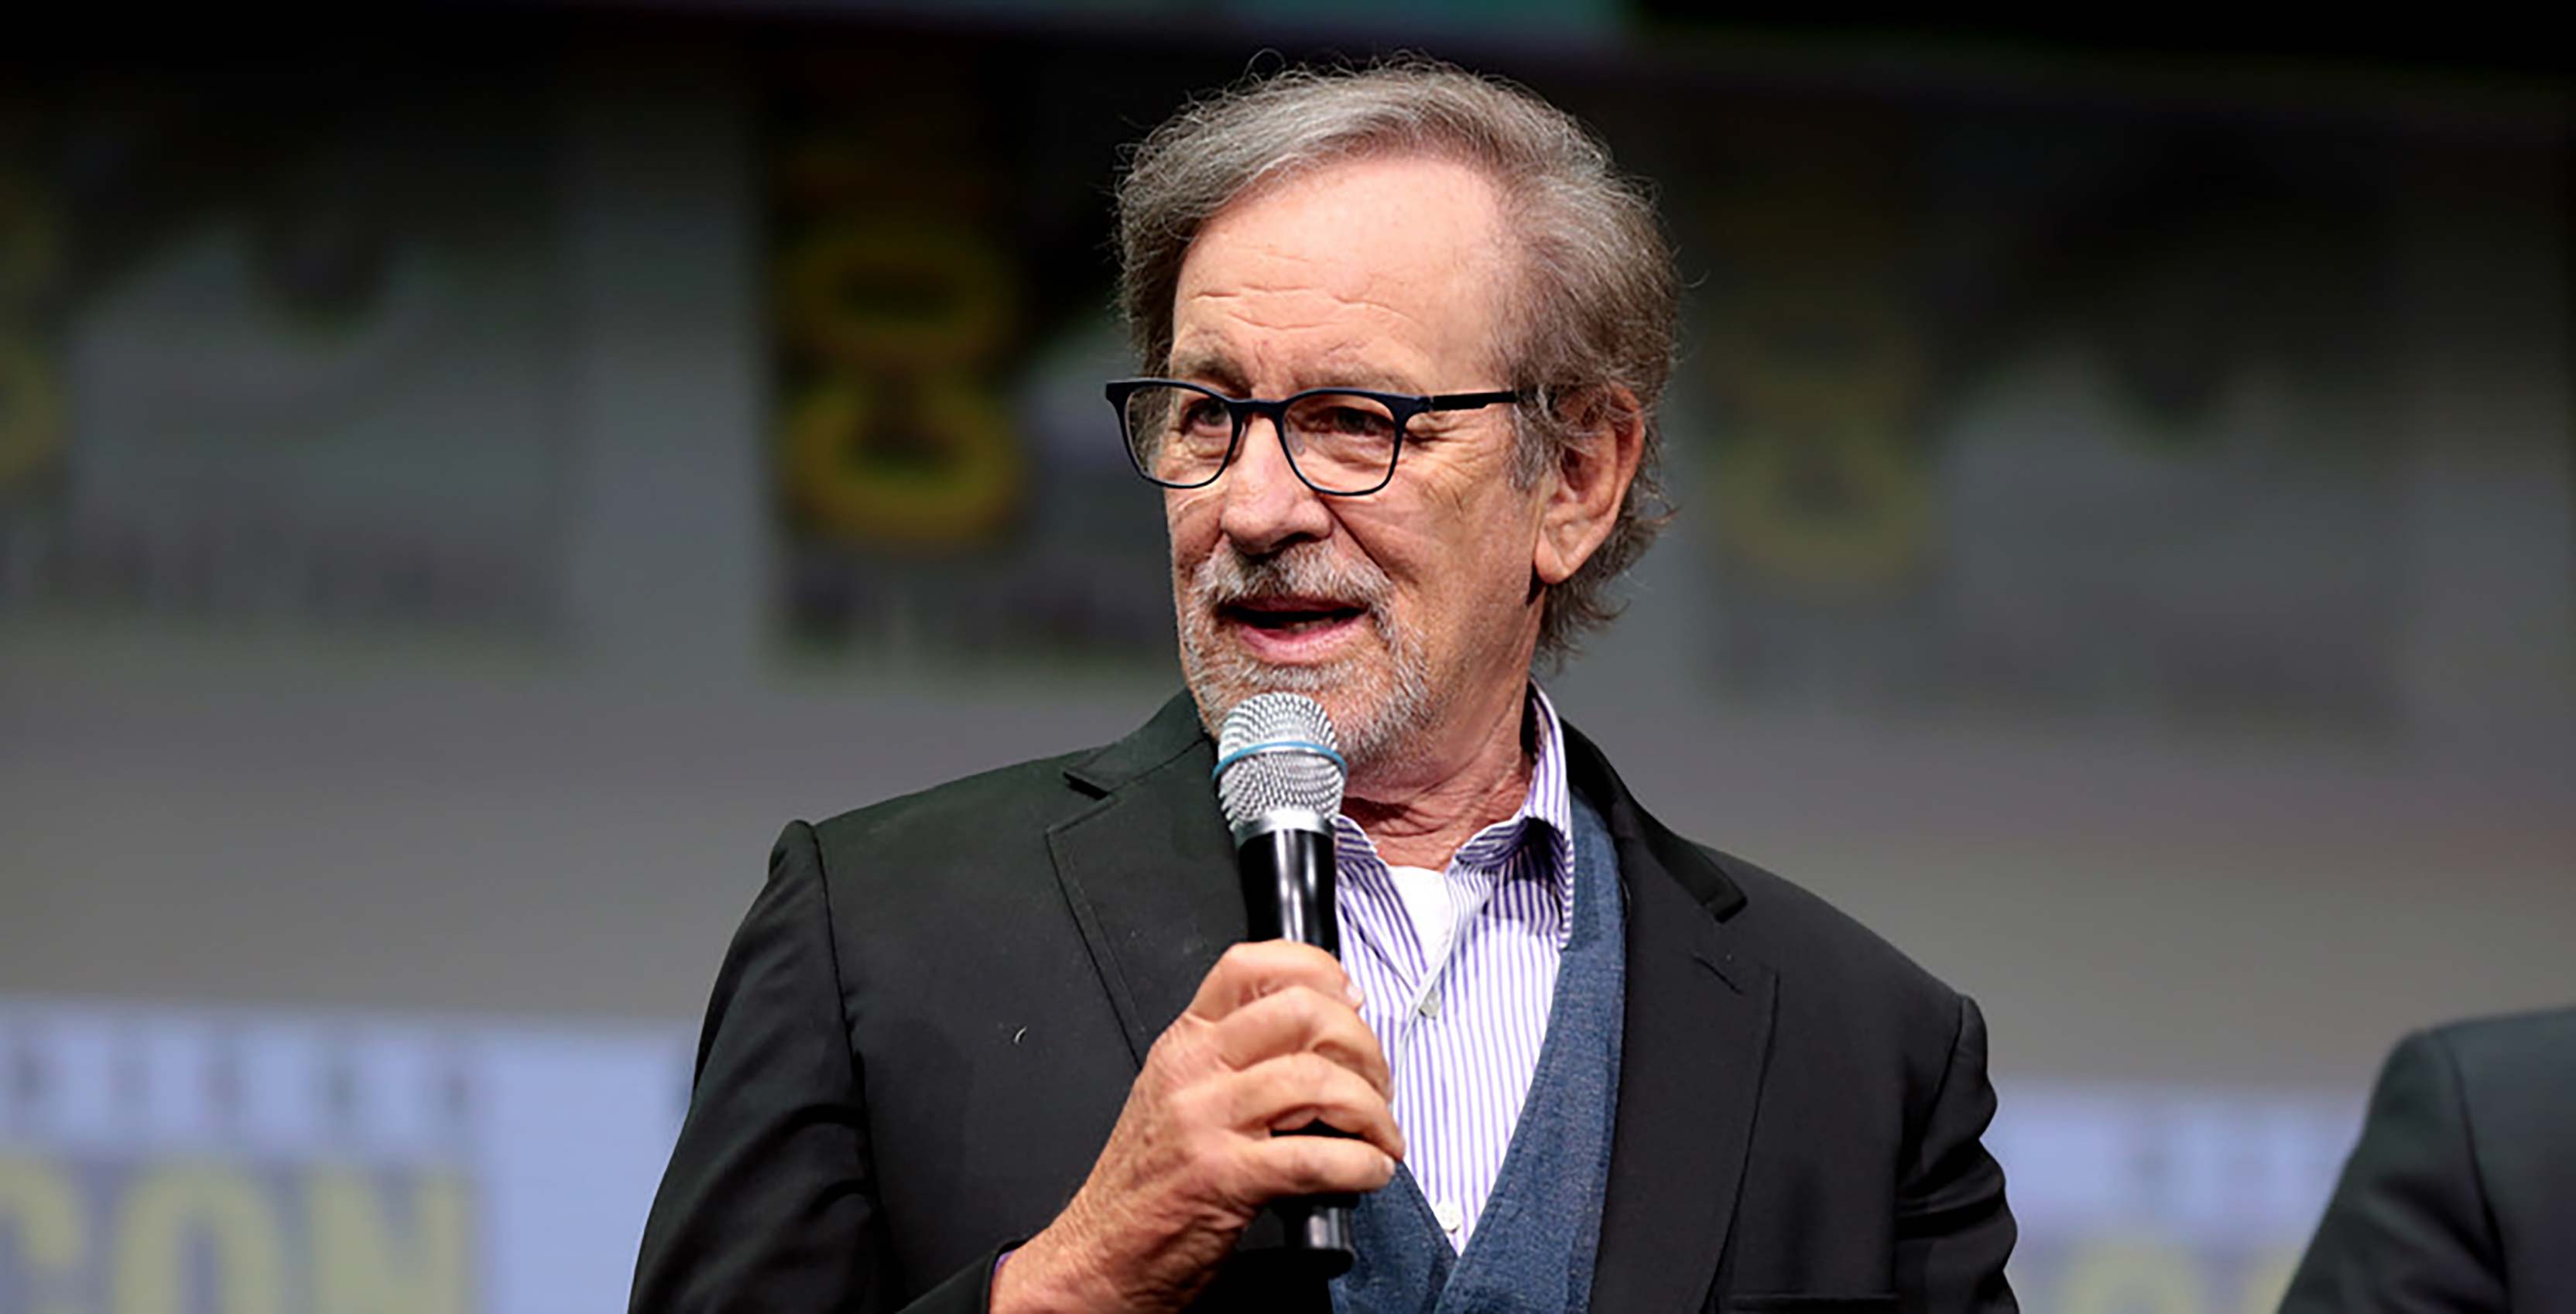 Steven Spielberg at San Diego Comic Con